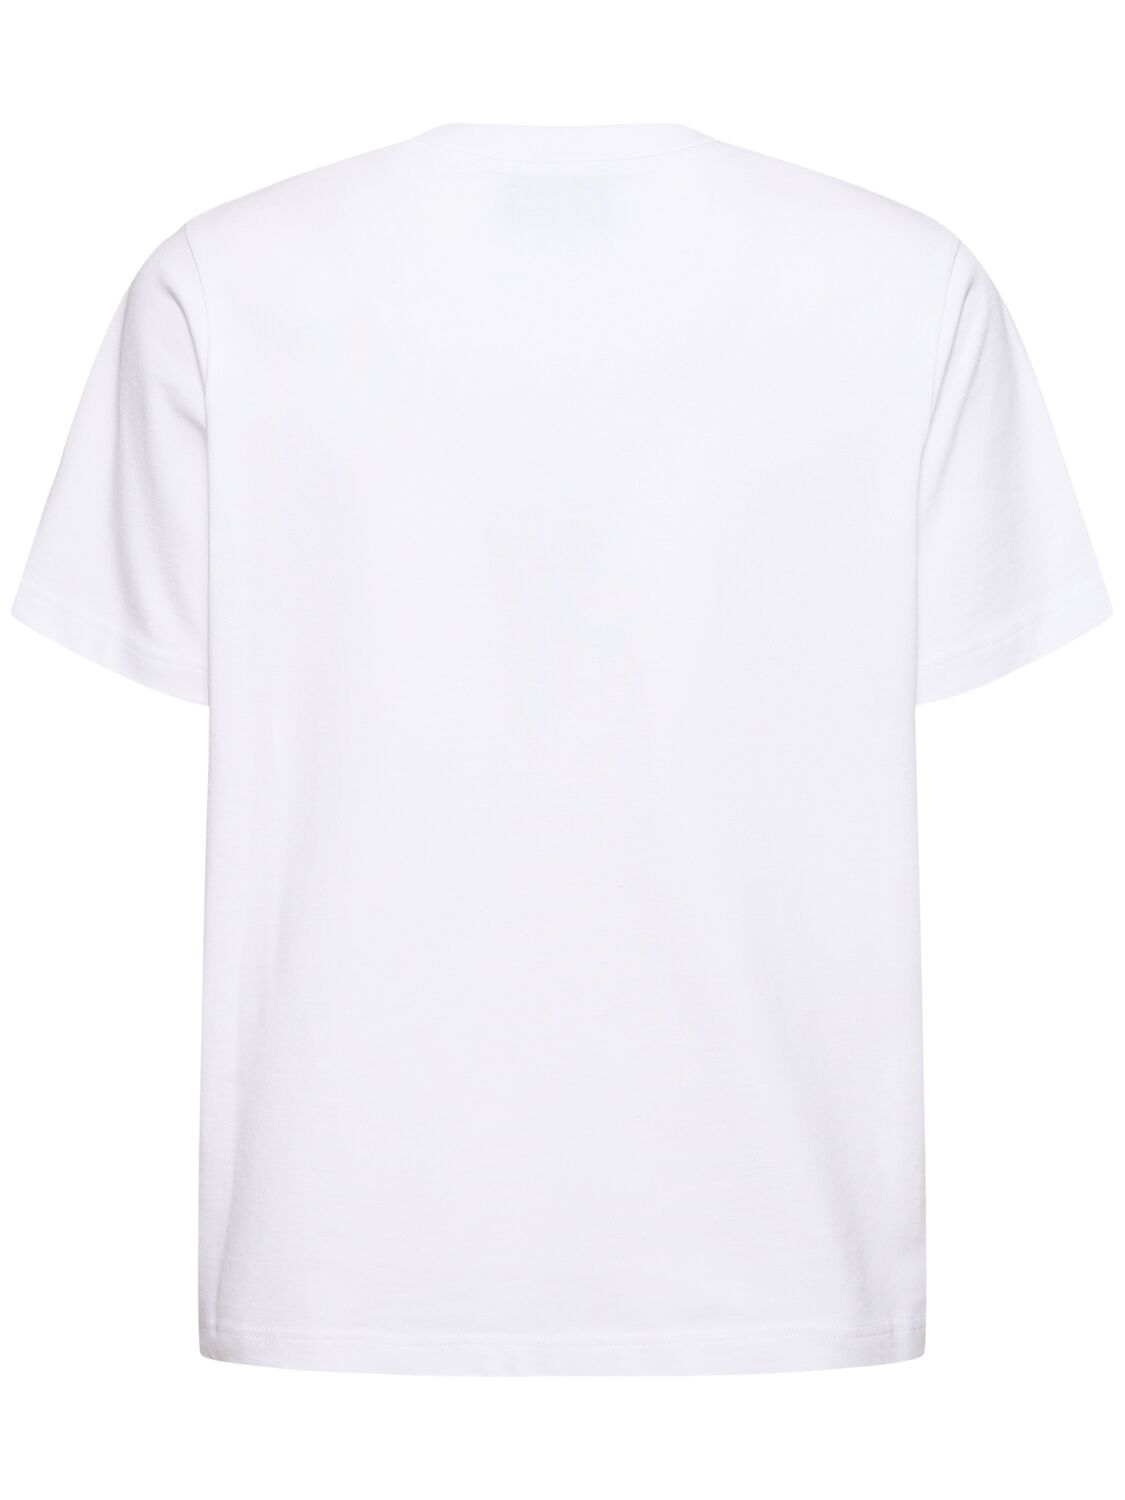 Shop Casablanca Unity Is Power Organic Cotton T-shirt In White